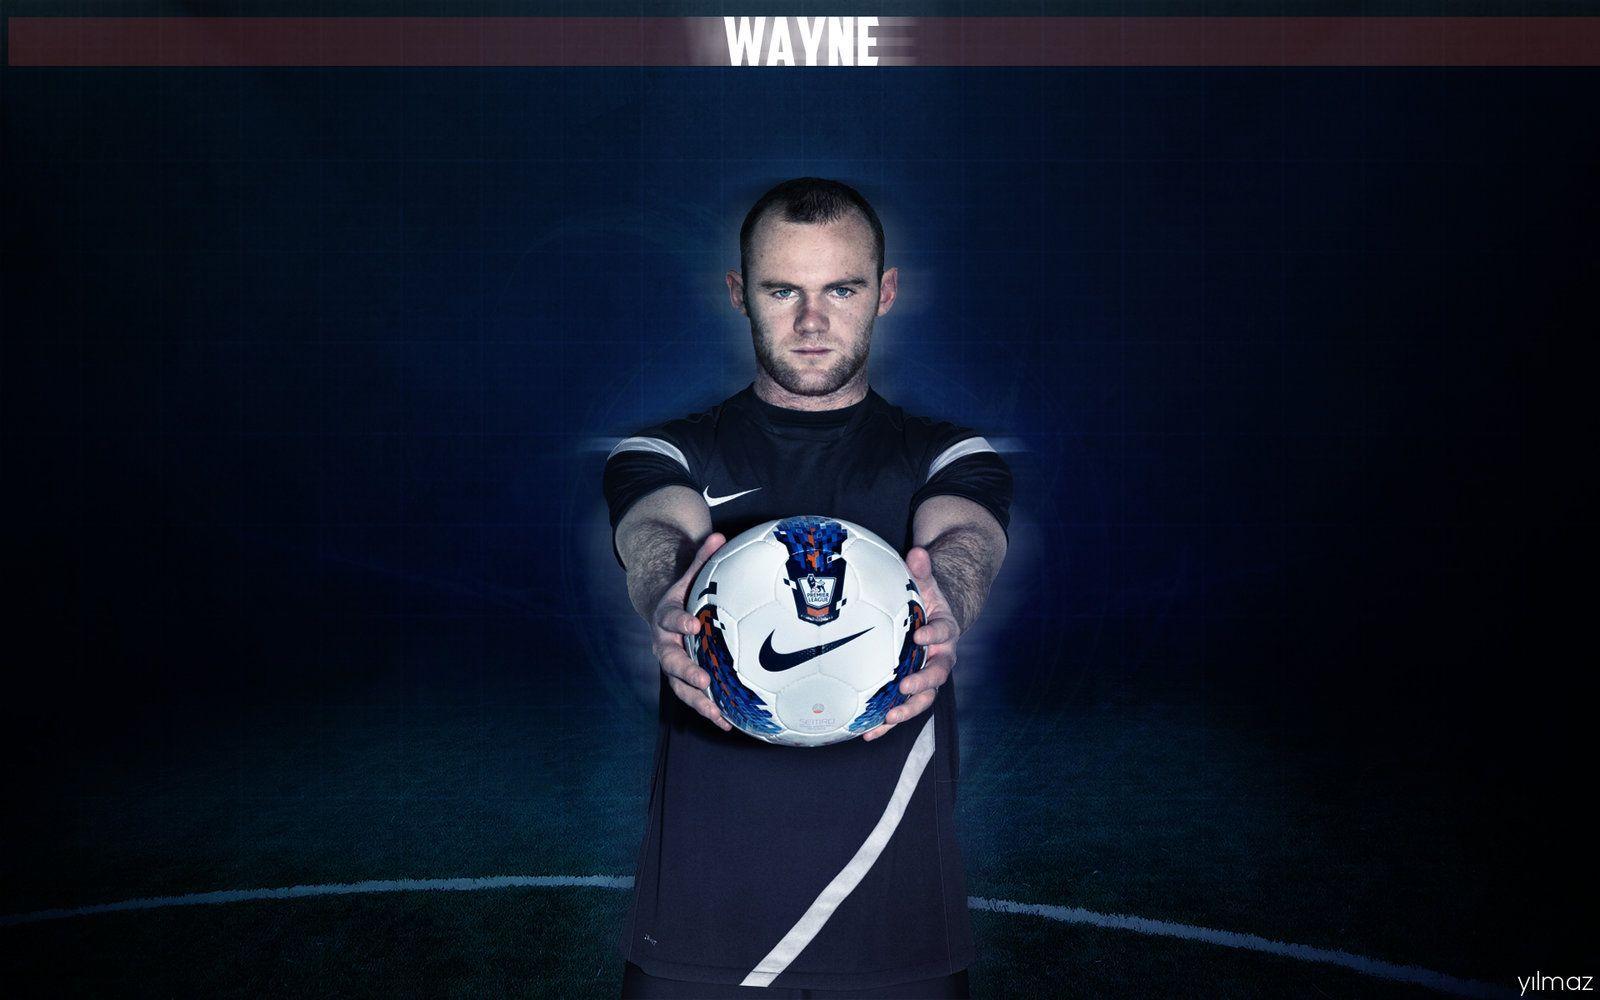 Nike promo for Wayne Rooney